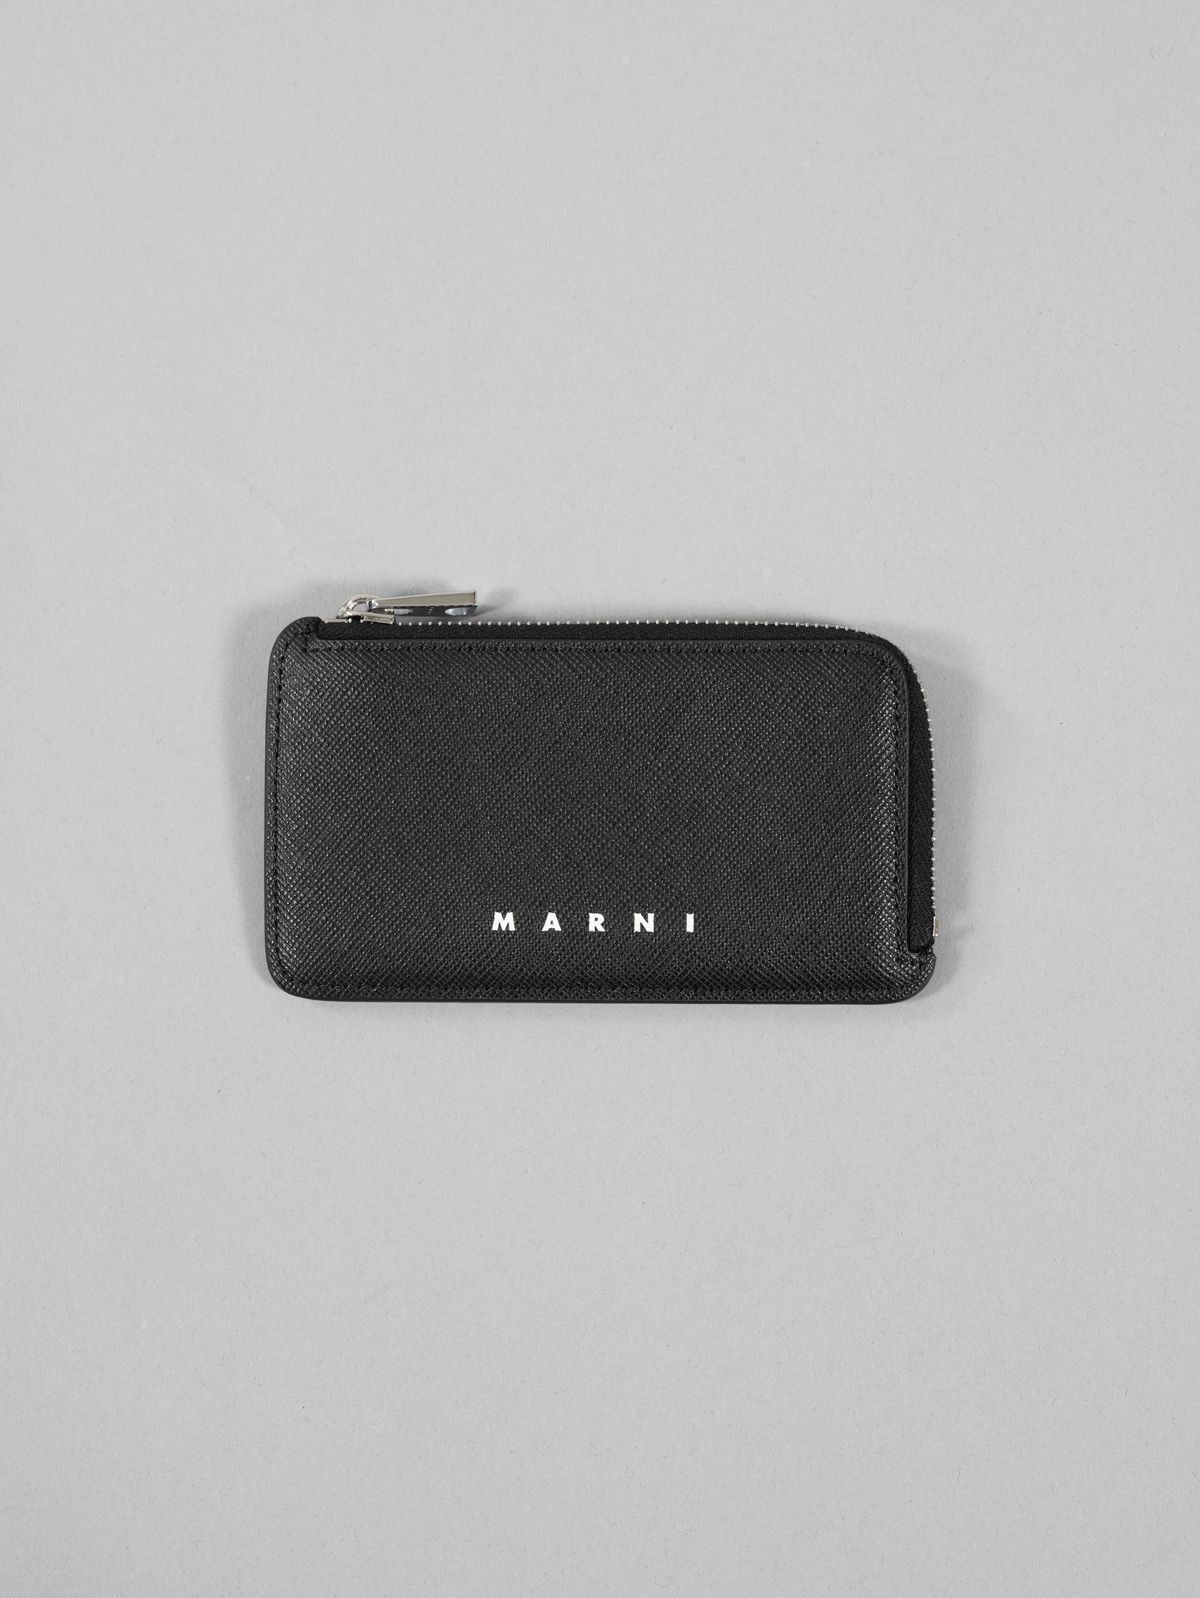 MARNI - 【ラスト1点】COIN CARD CASE / コインケース / カードケース 